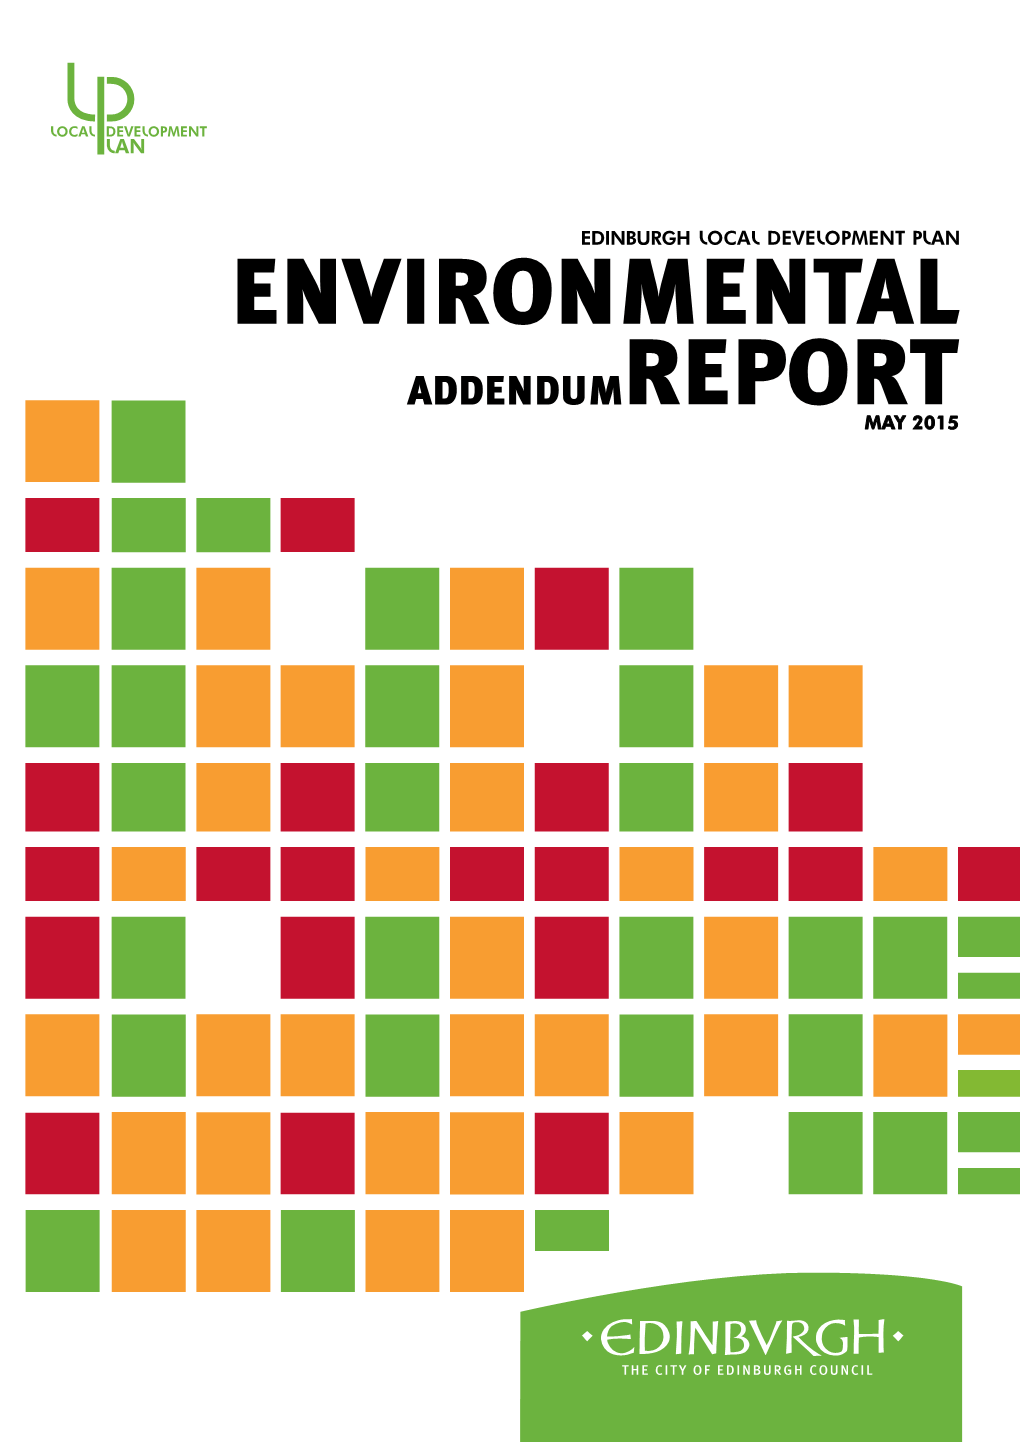 LDP Environmental Report Addendum May 2015